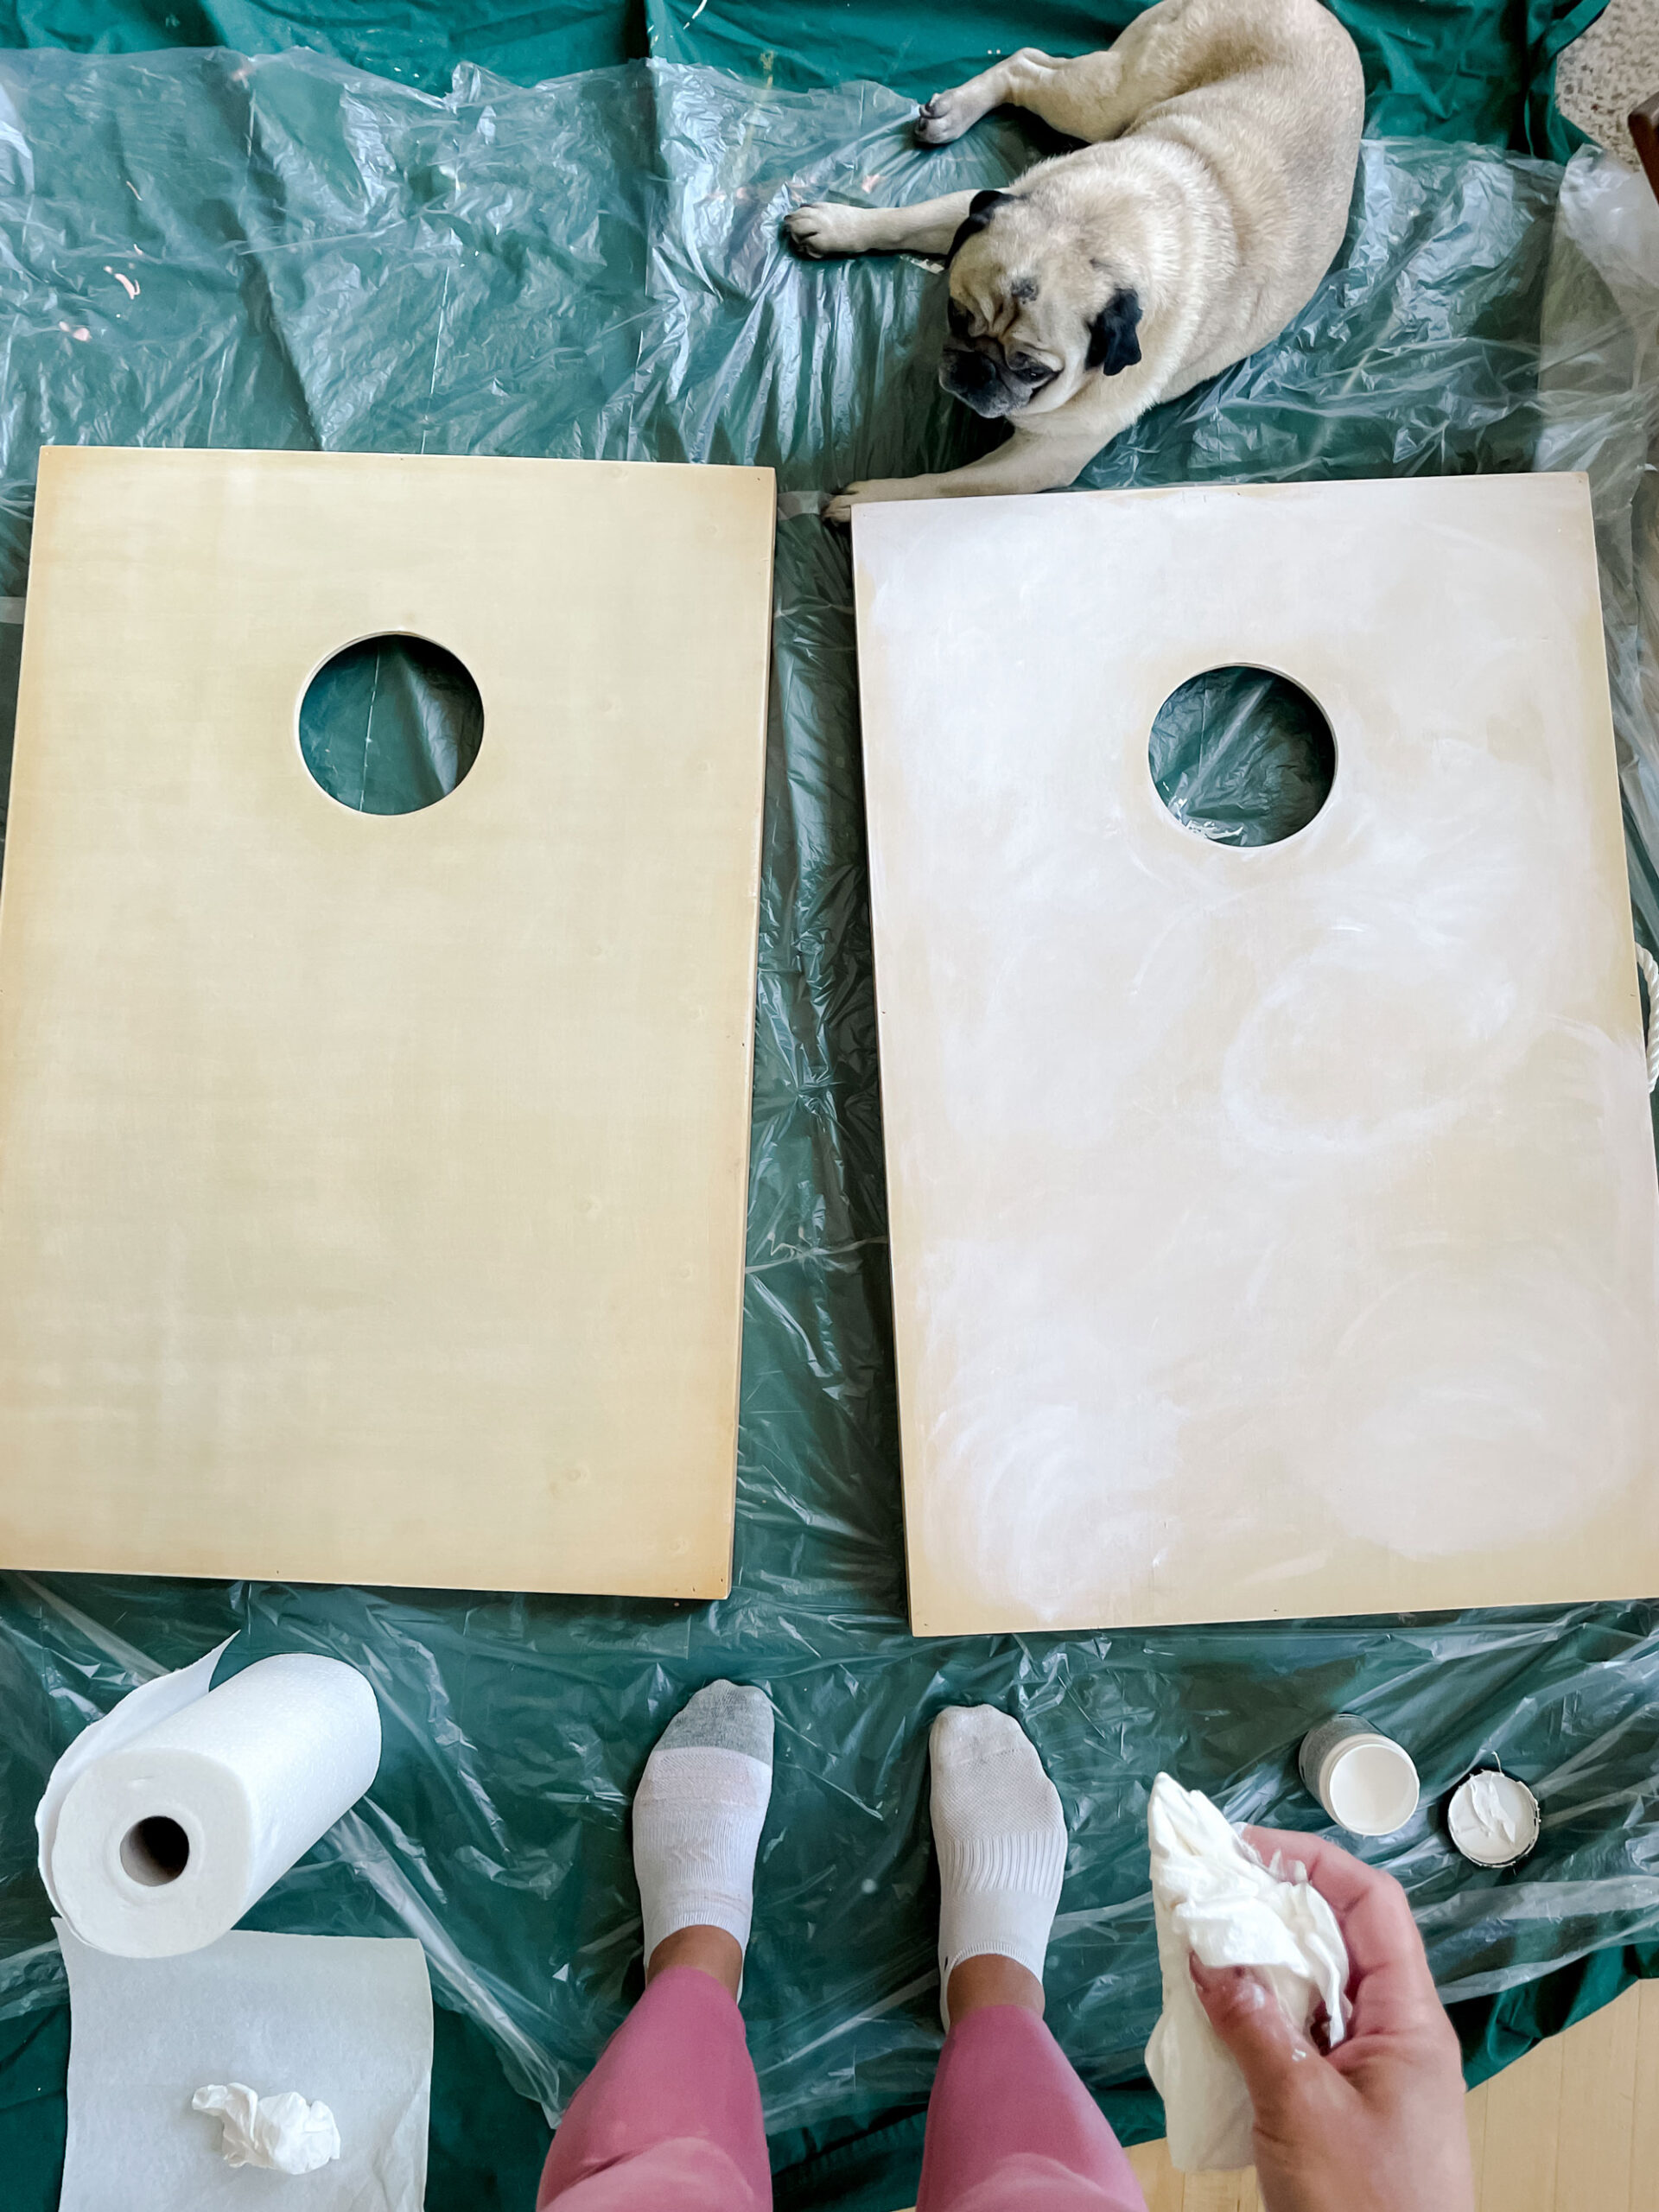 How to paint custom bag boards, palm leaf bag boards, 4th of july bag boards, colorful custom bag boards, painted bag boards DIY